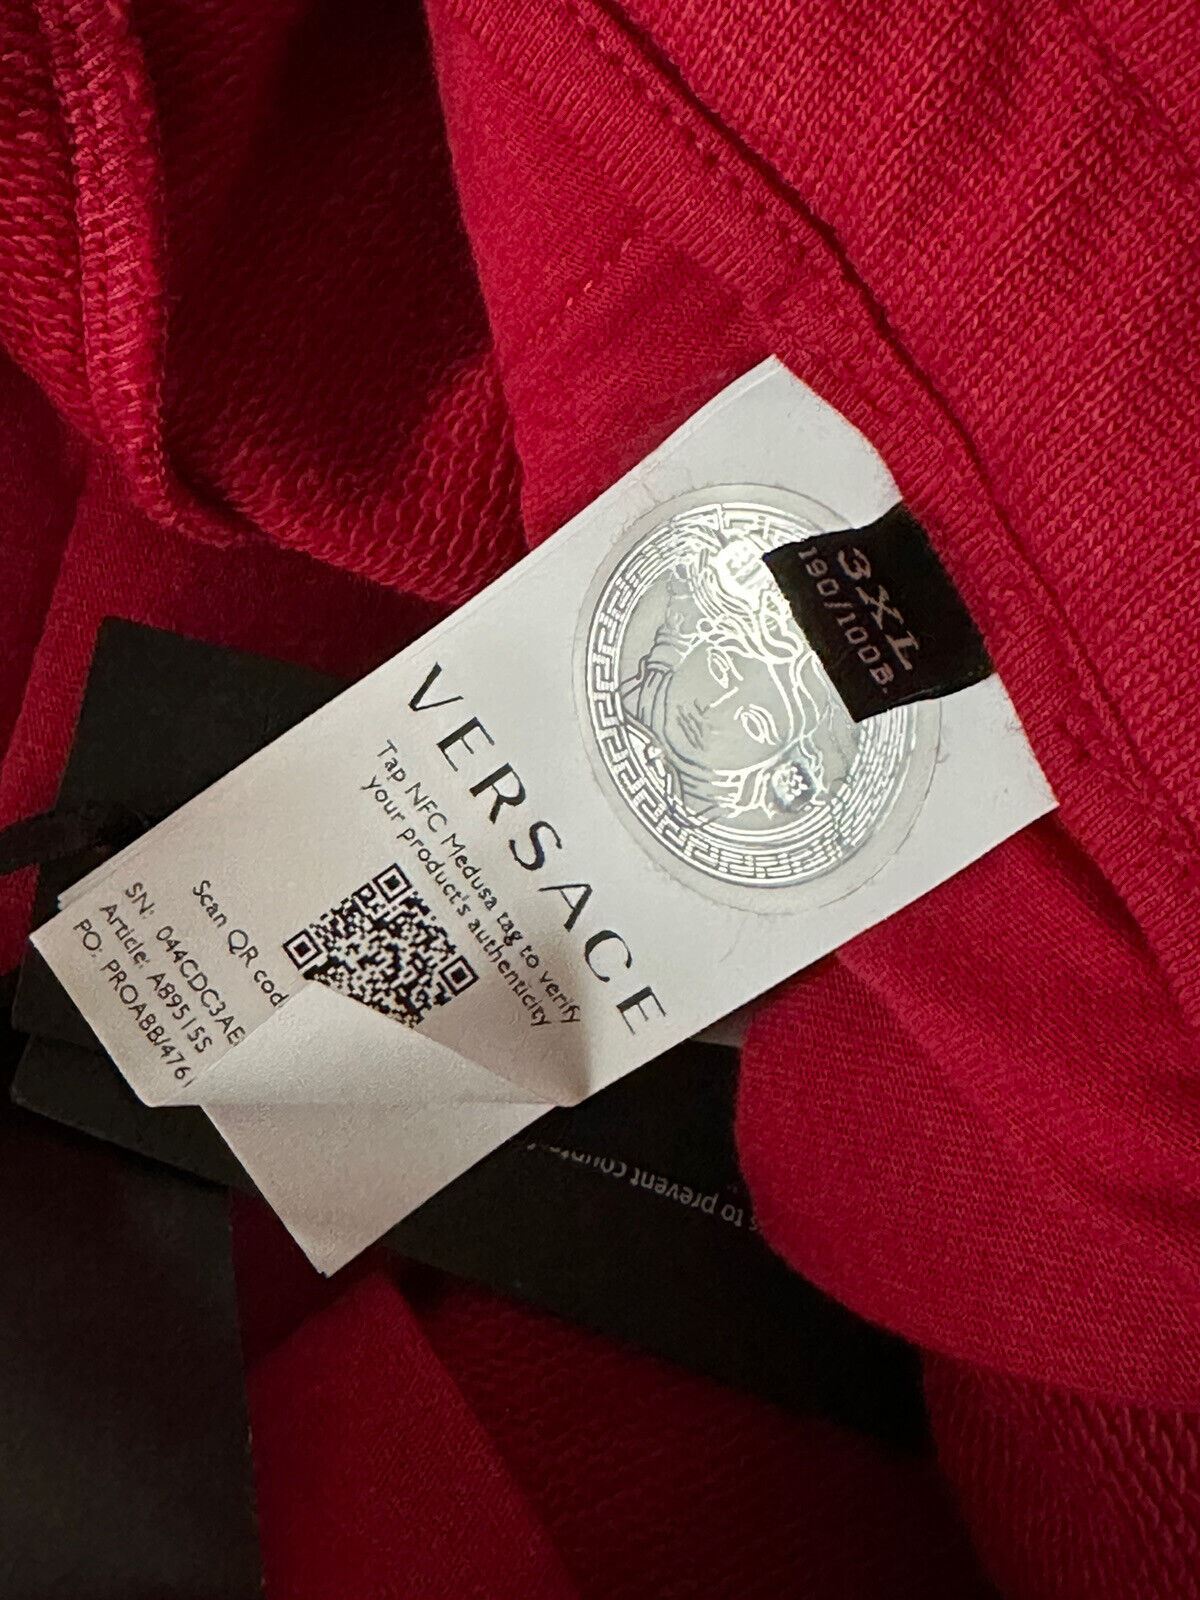 NWT $650 Versace Men's Medusa Logo Red Pants Size 3XL A89515S